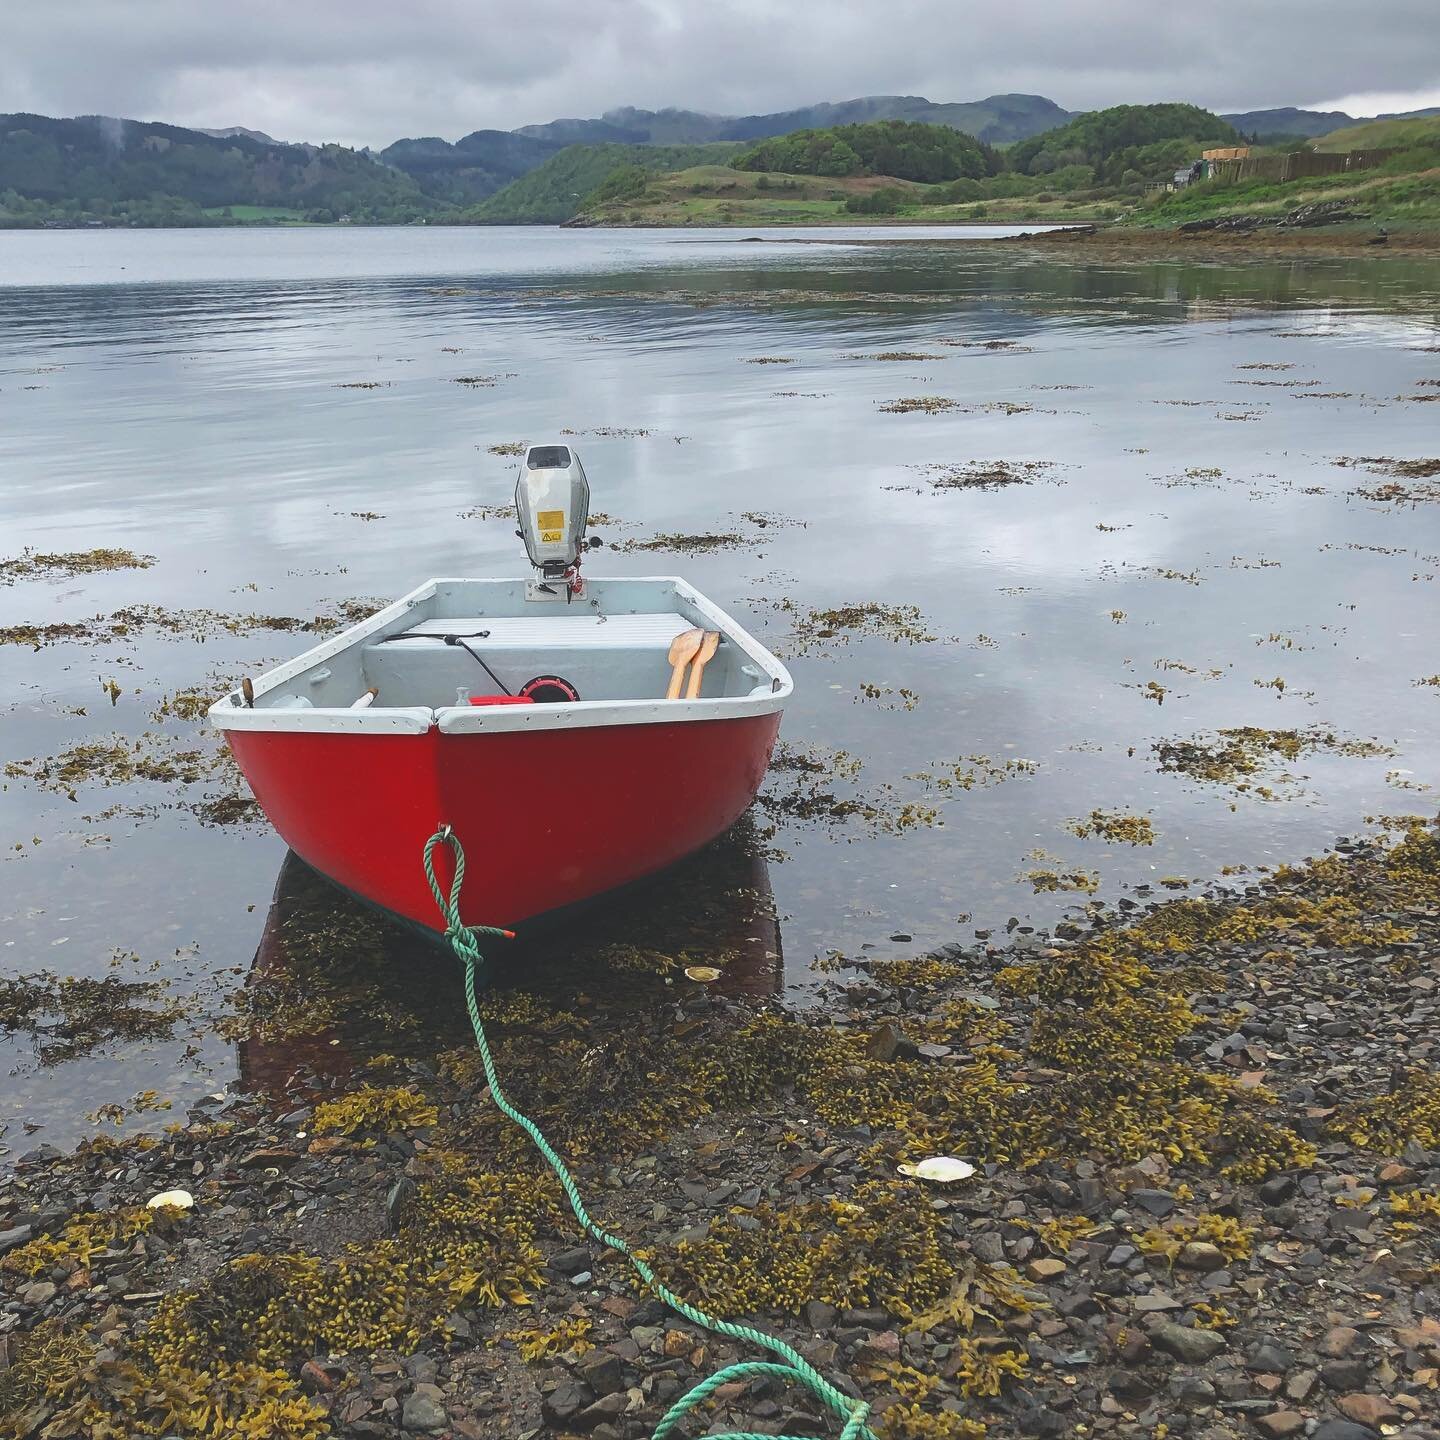 Our little red boat. Looking forward to seeing nature from the water 
🦑🦦🦀🪸

#redboat #boating #boatinglife #loch #seaweed #kamesfarm #boatlife #lifeonkamesfarm #seashore #scottishcoast #boatfun #littleredboat #oban #scotland #scotlandexplore